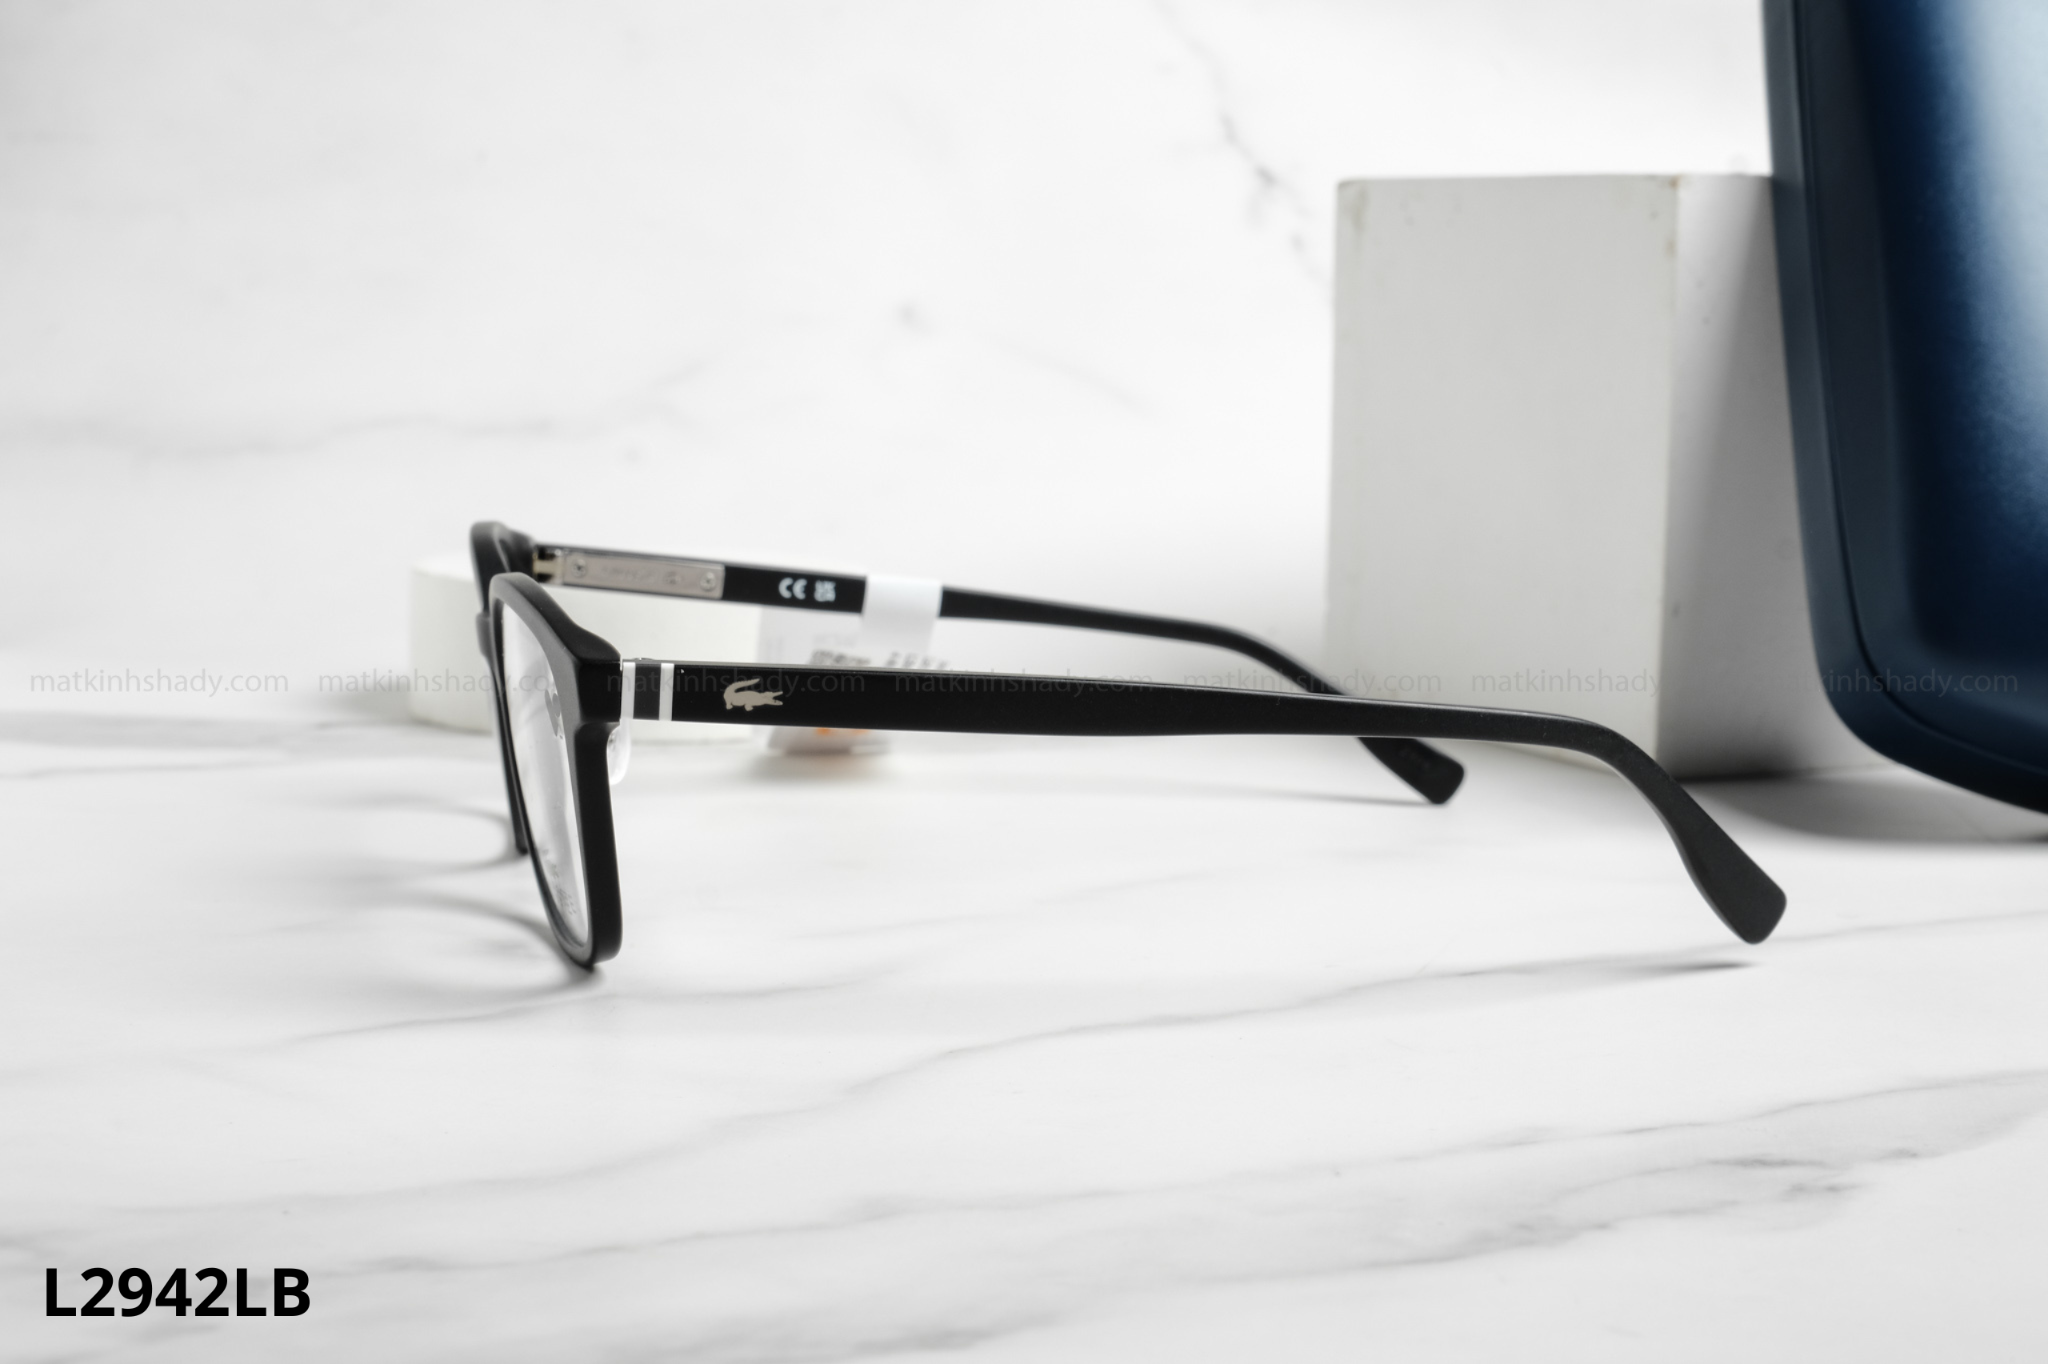  Lacoste Eyewear - Glasses - L2942LB 